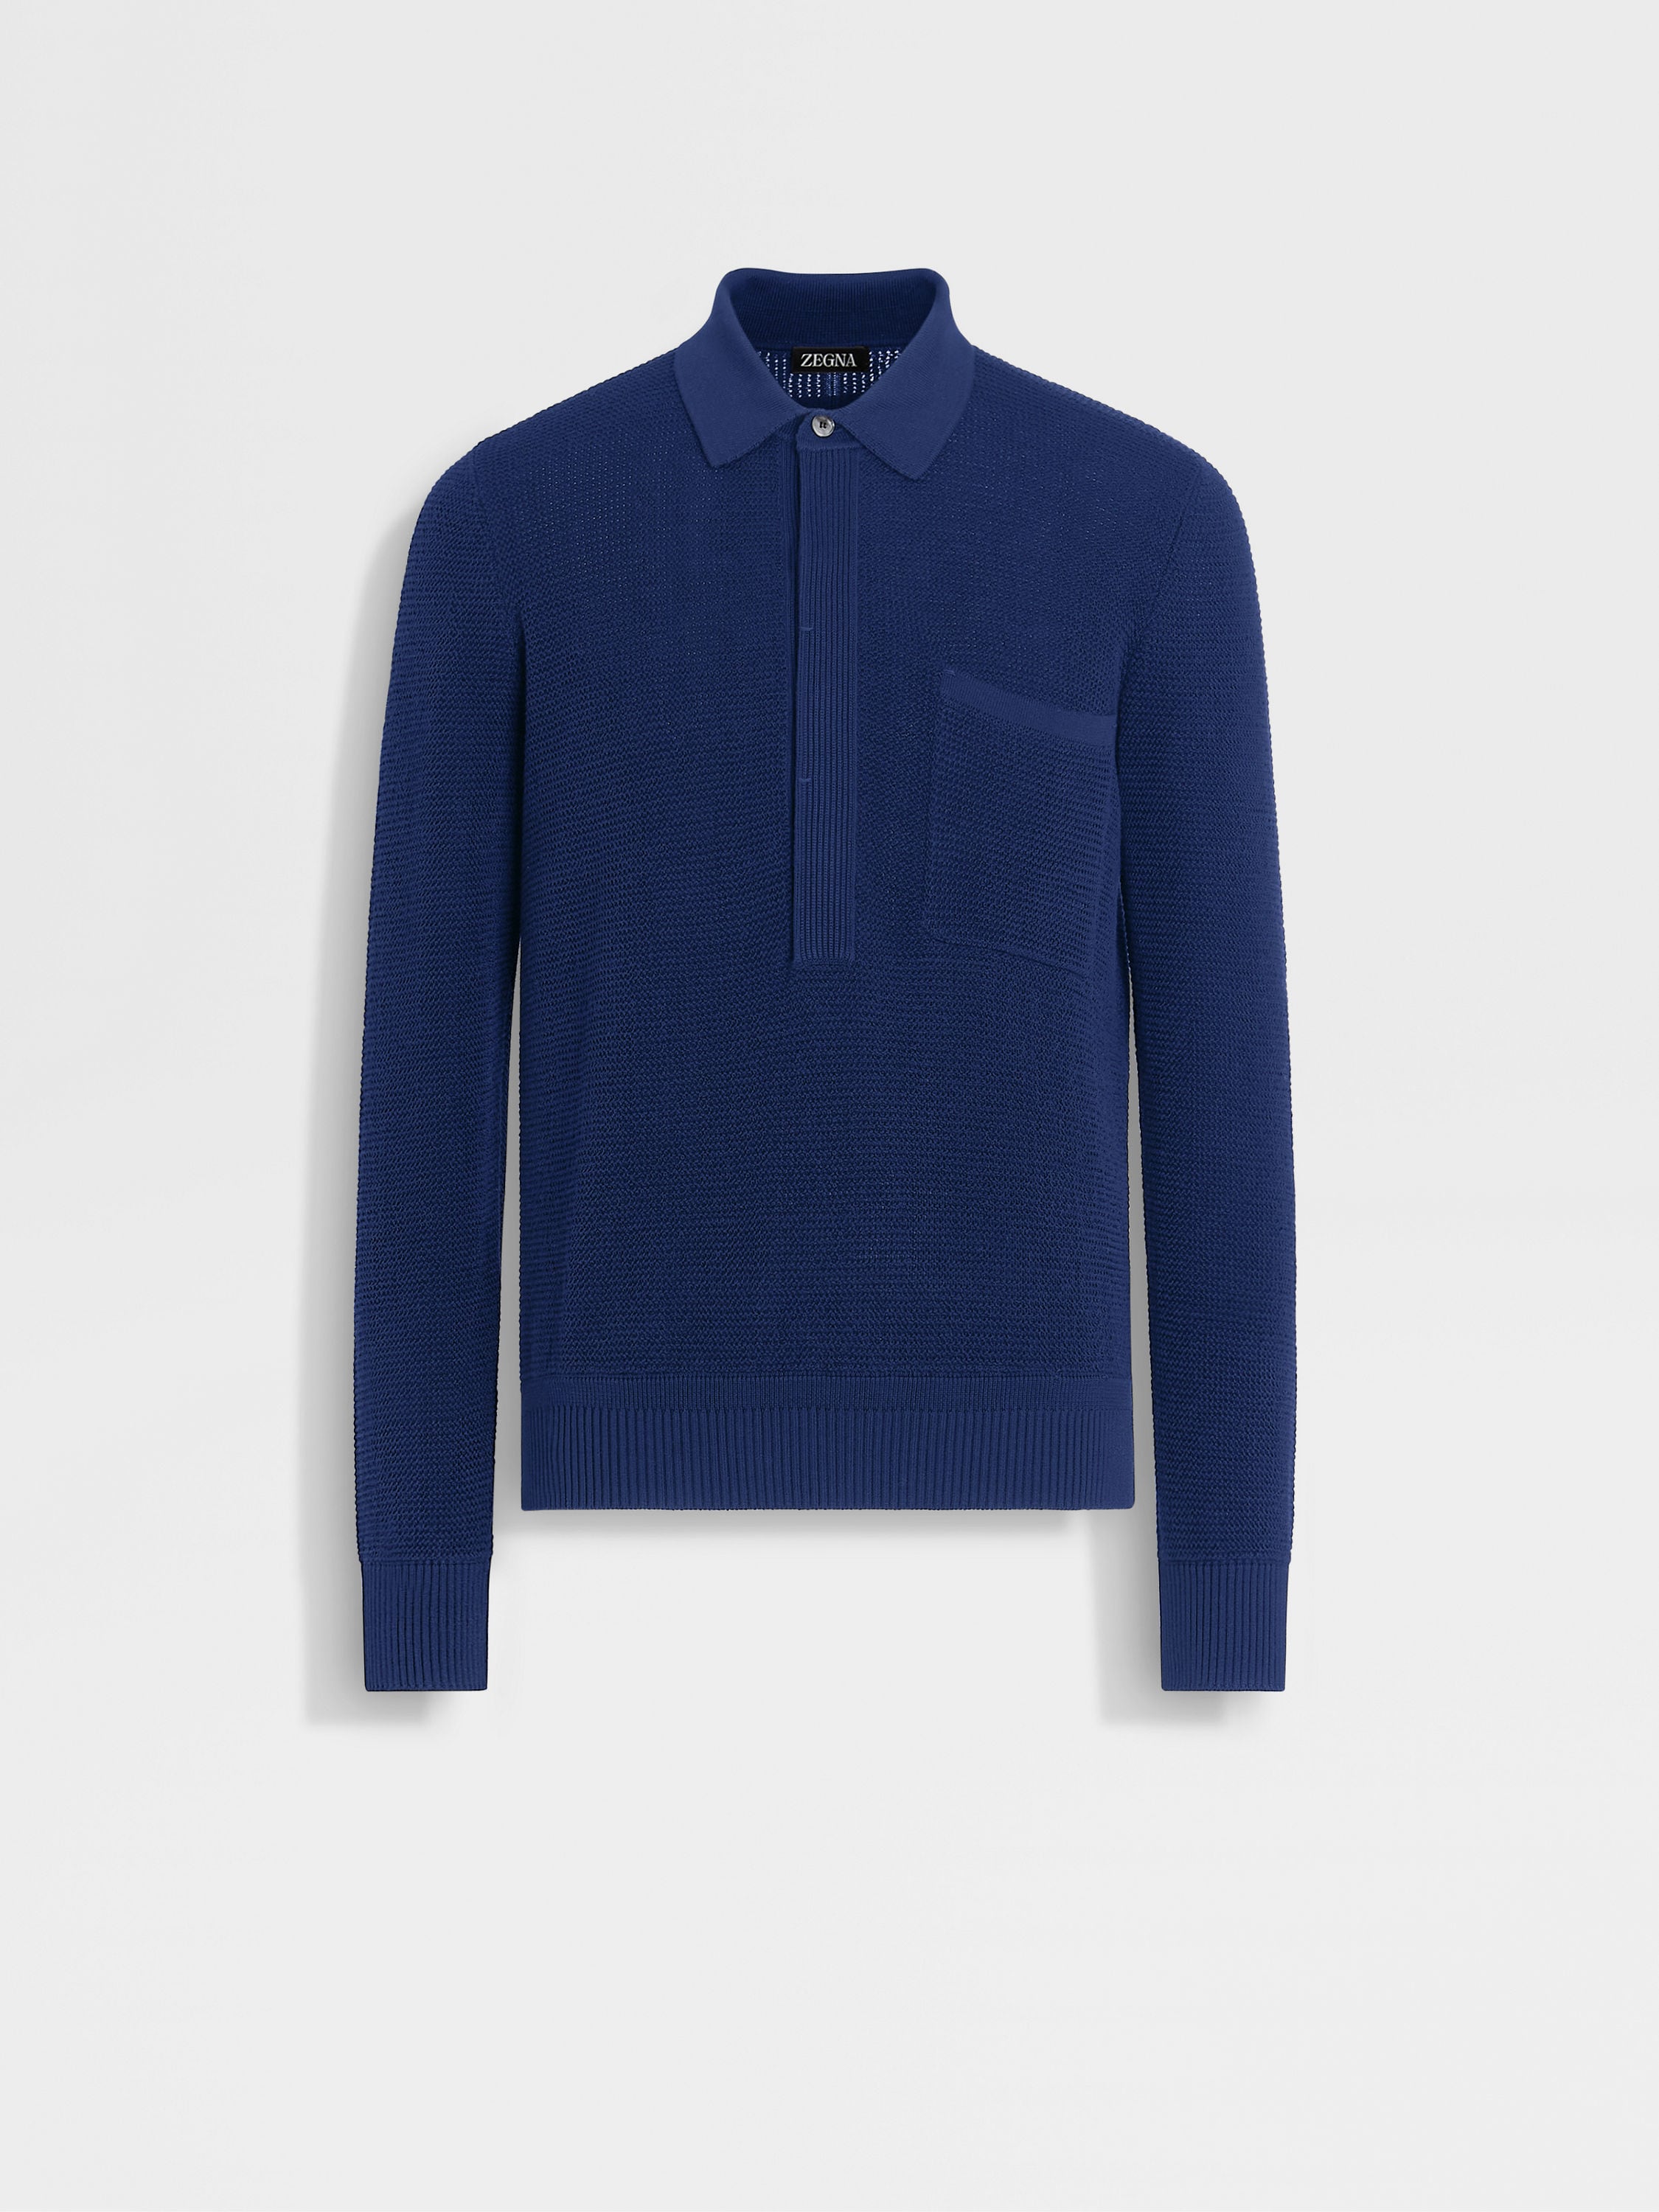 Utility Blue Mélange Cotton and Silk Polo Shirt